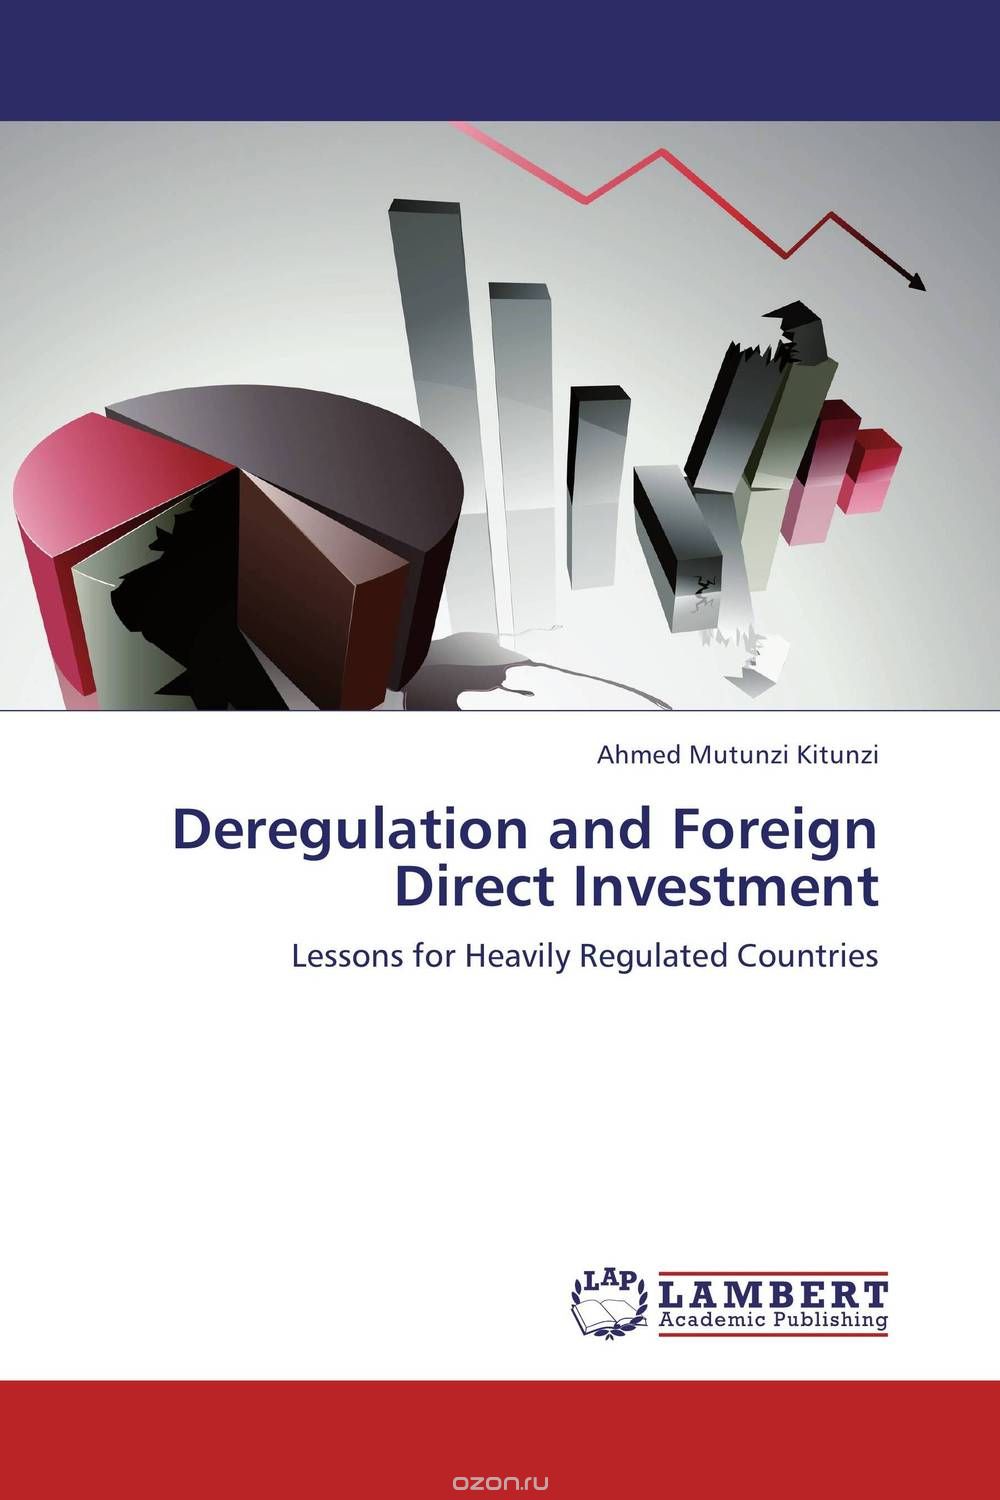 Скачать книгу "Deregulation and Foreign Direct Investment"